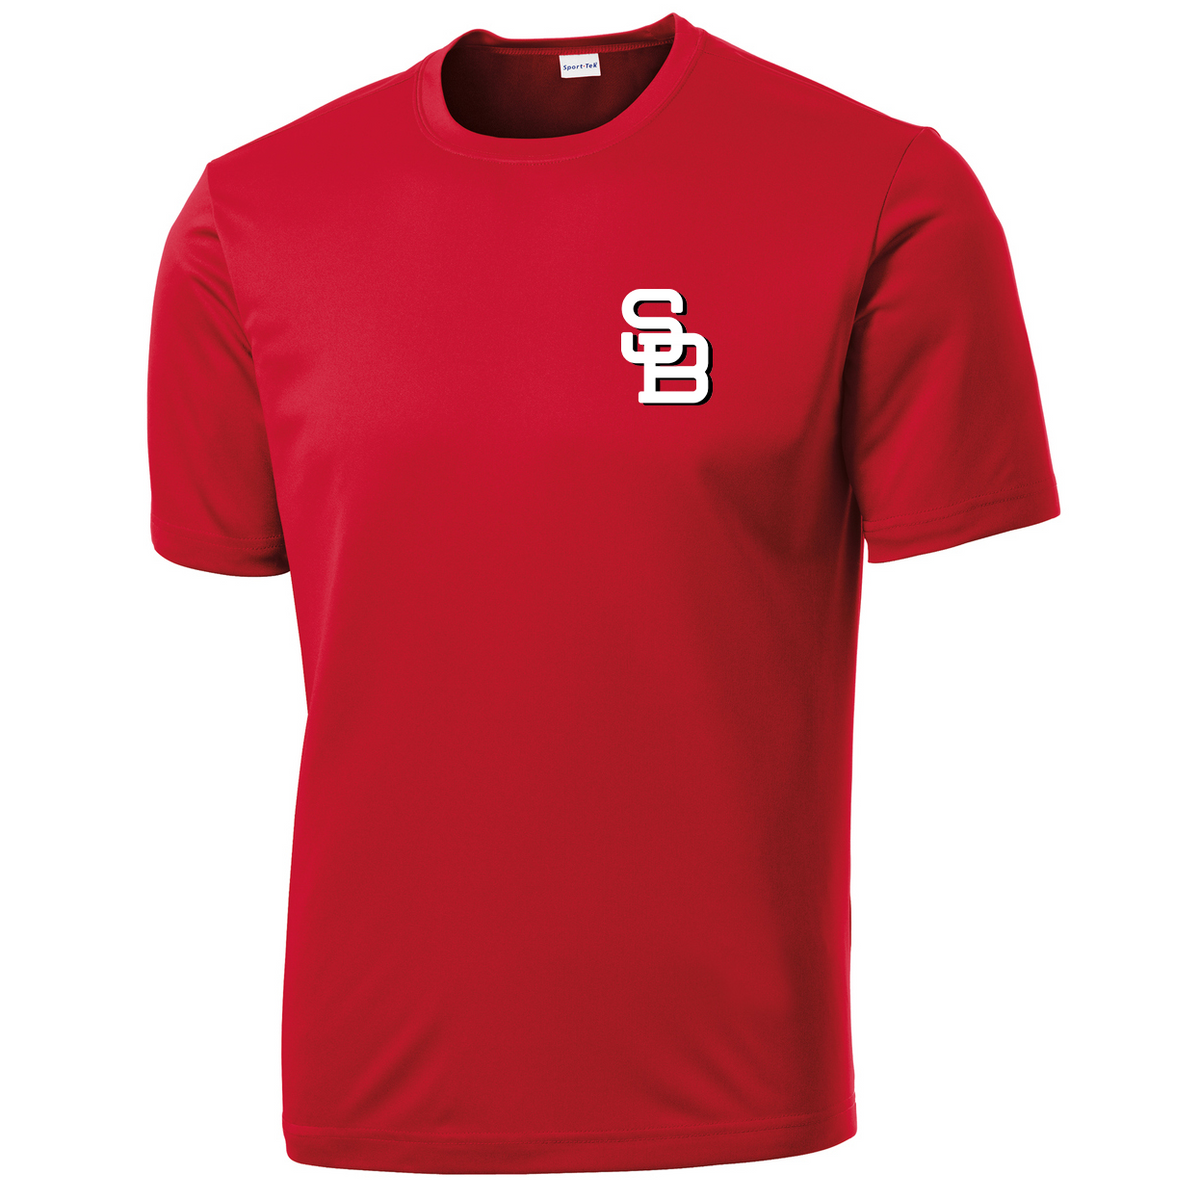 Snipers Baseball Performance T-Shirt